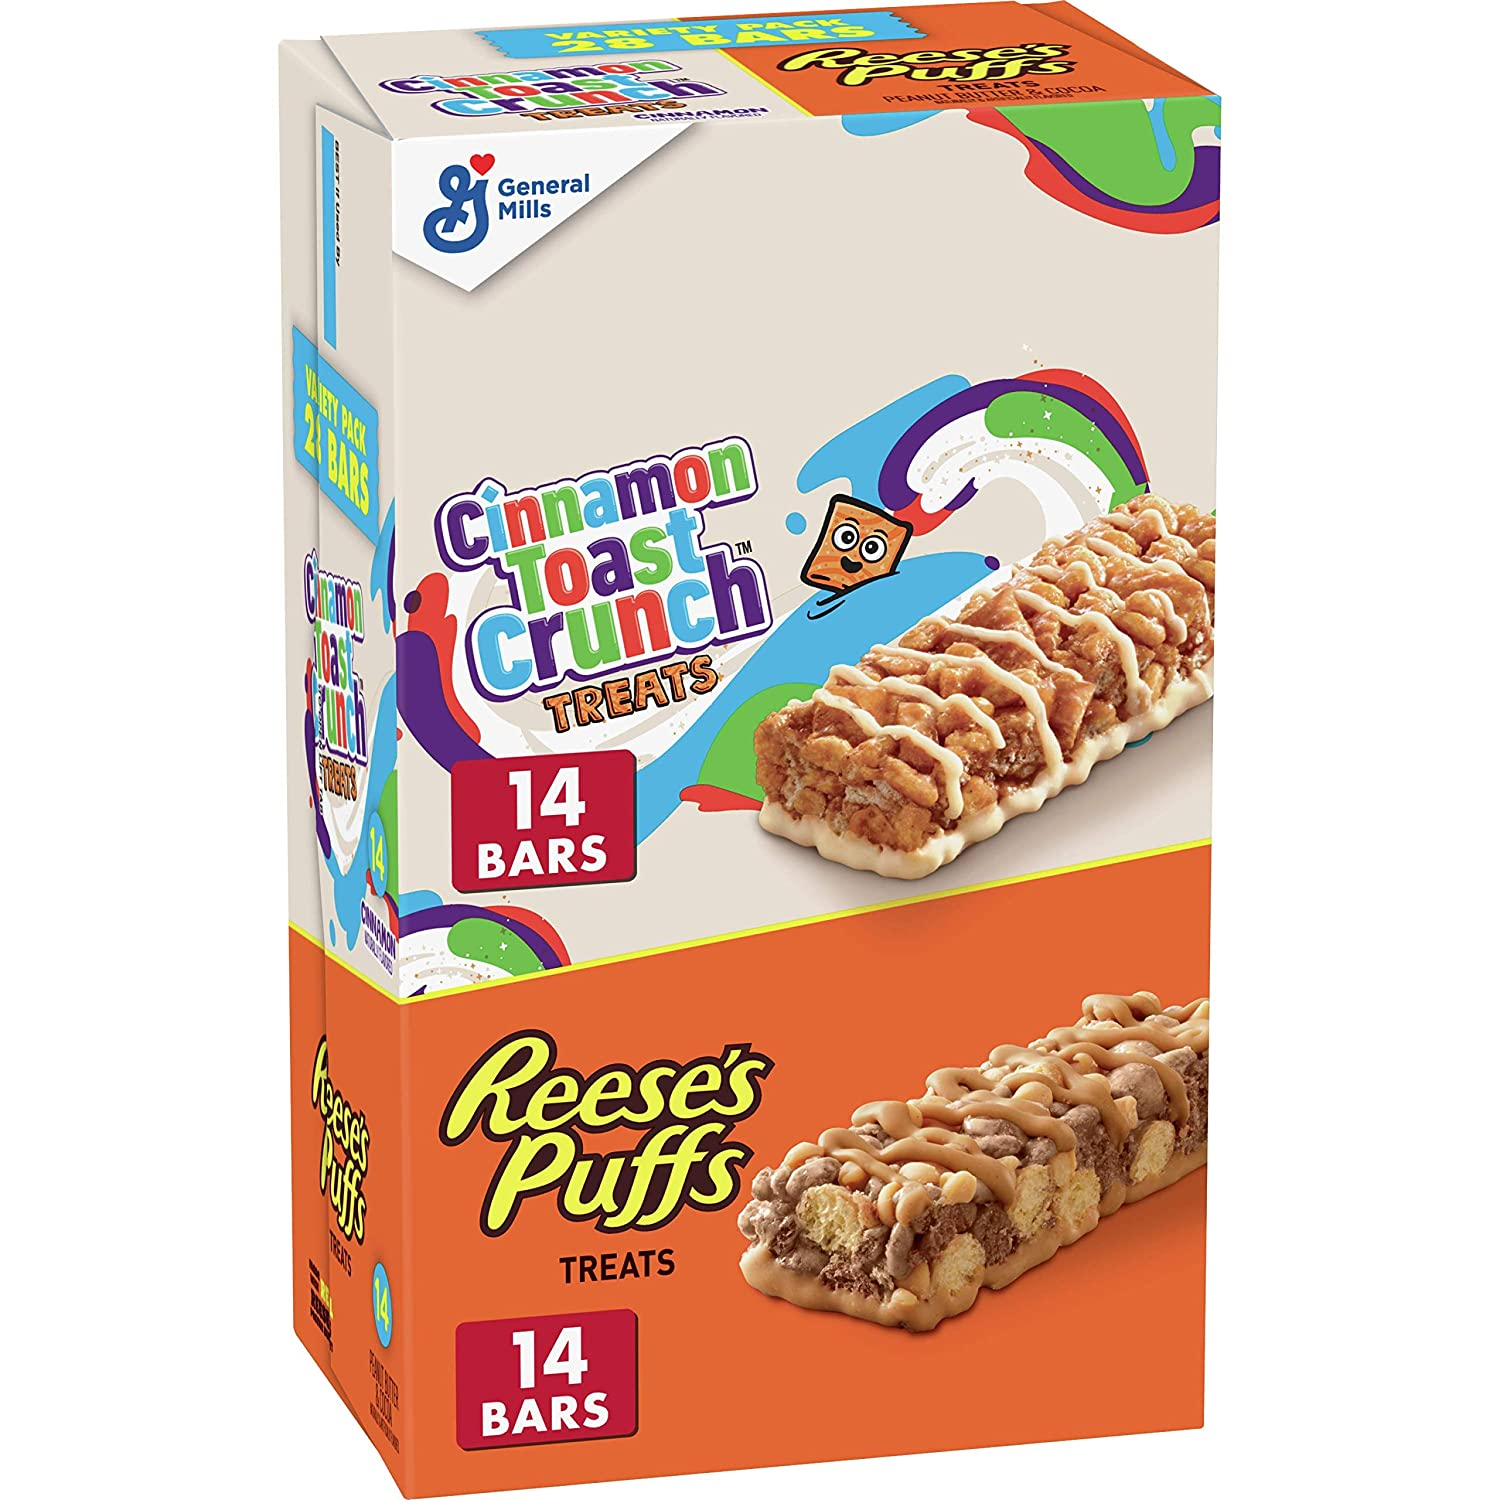 Puffs and Cinnamon Toast Crunch, Breakfast Bar Variety Pack, 28 Bars $9.62